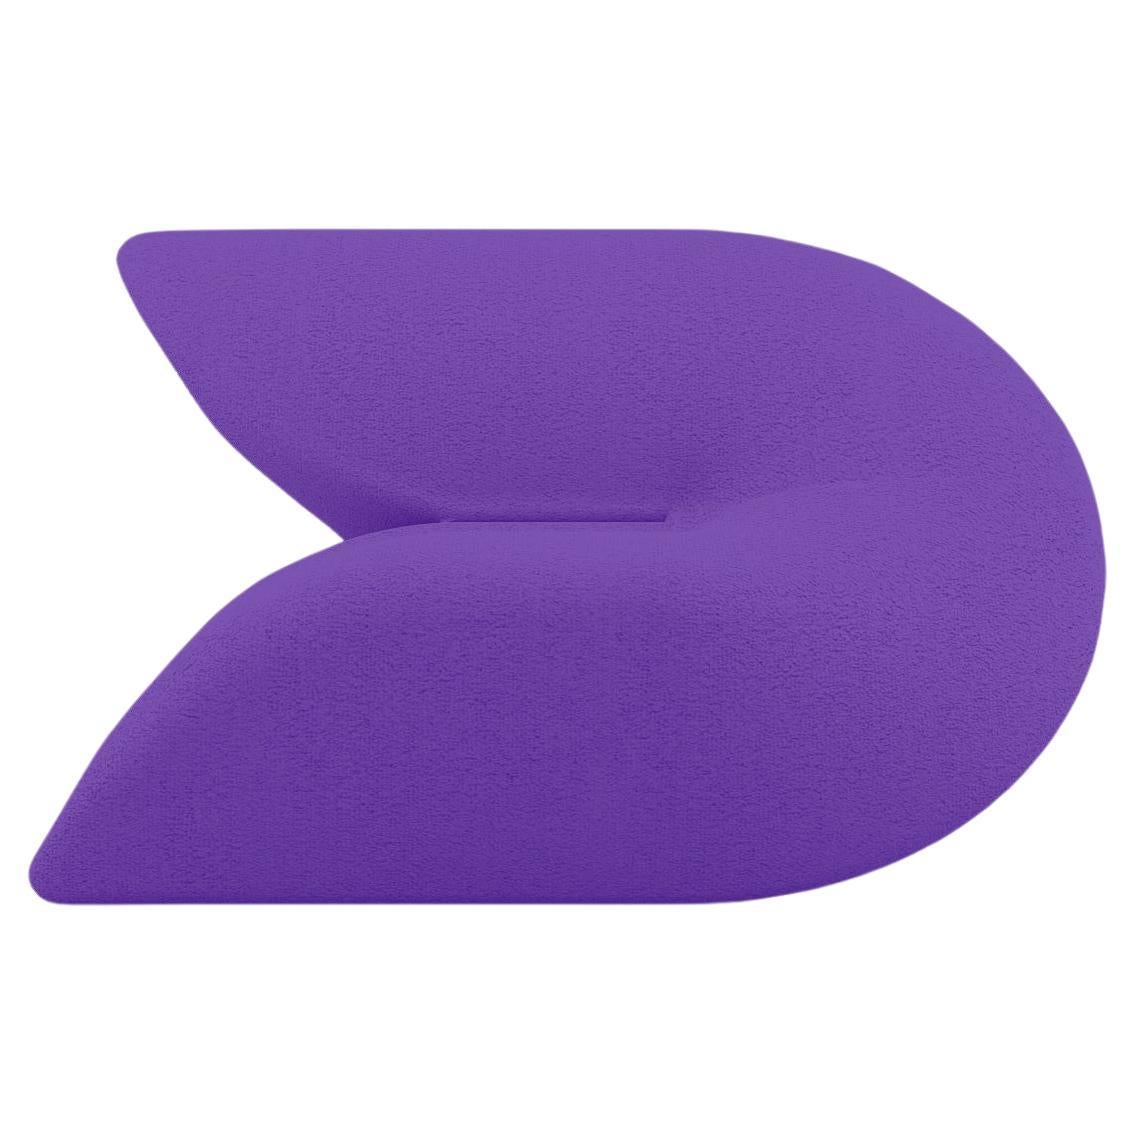 Delta Armchair - Modern Ultra Violet Upholstered Armchair For Sale